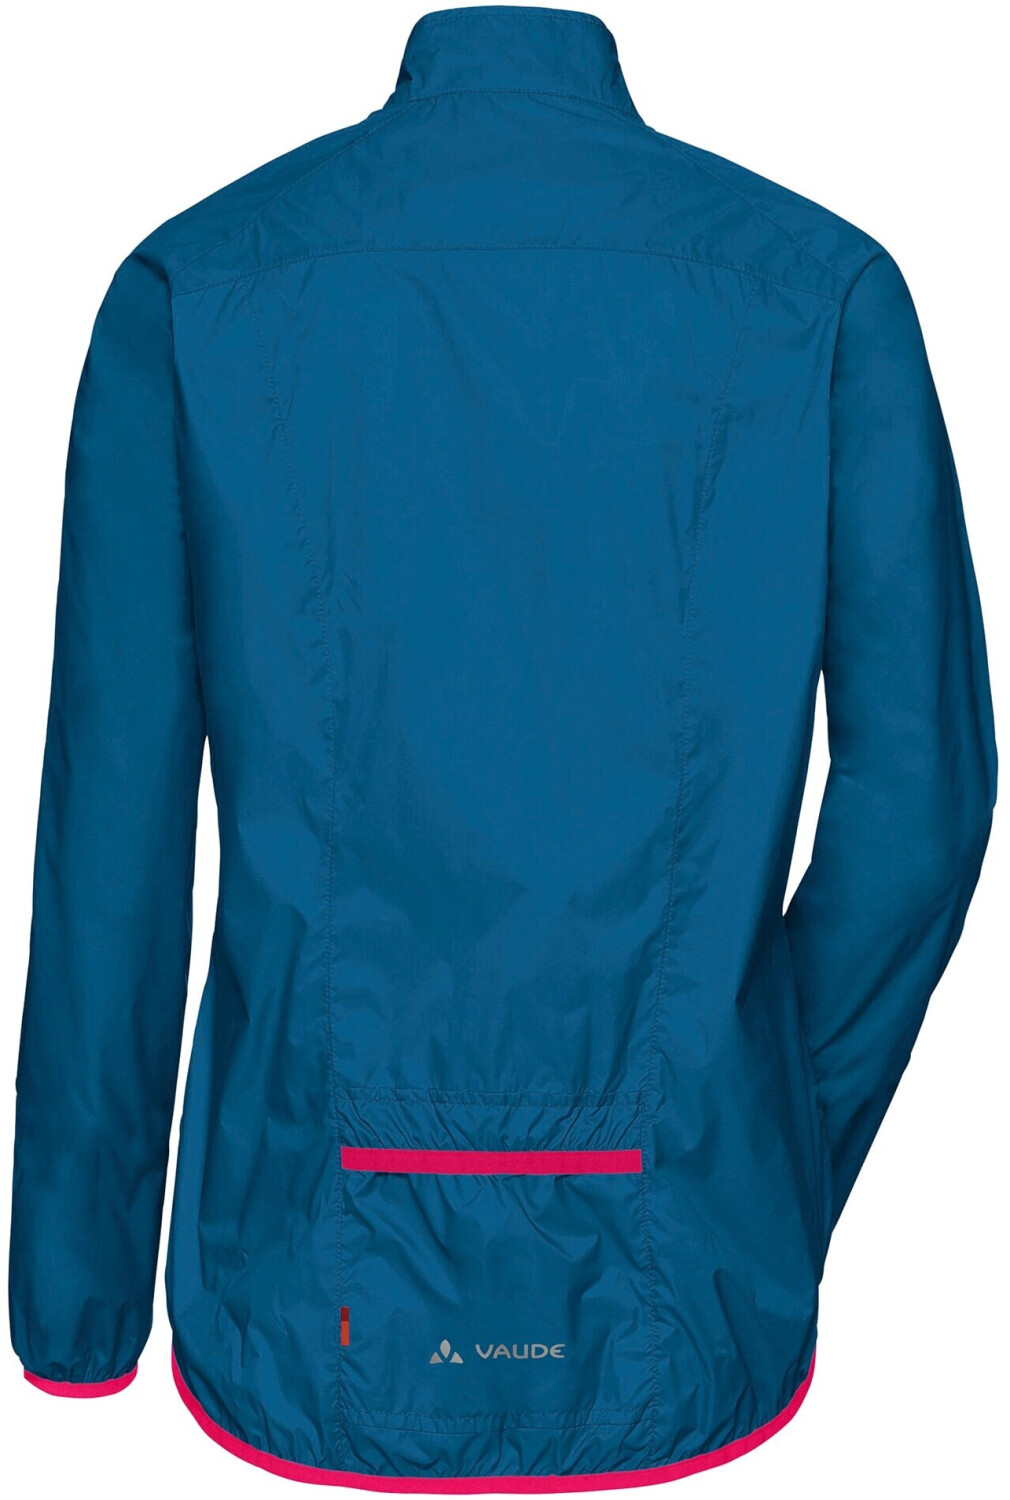 VAUDE Women's Air Jacket III kingfisher/pink ab 59,95 € | Preisvergleich  bei